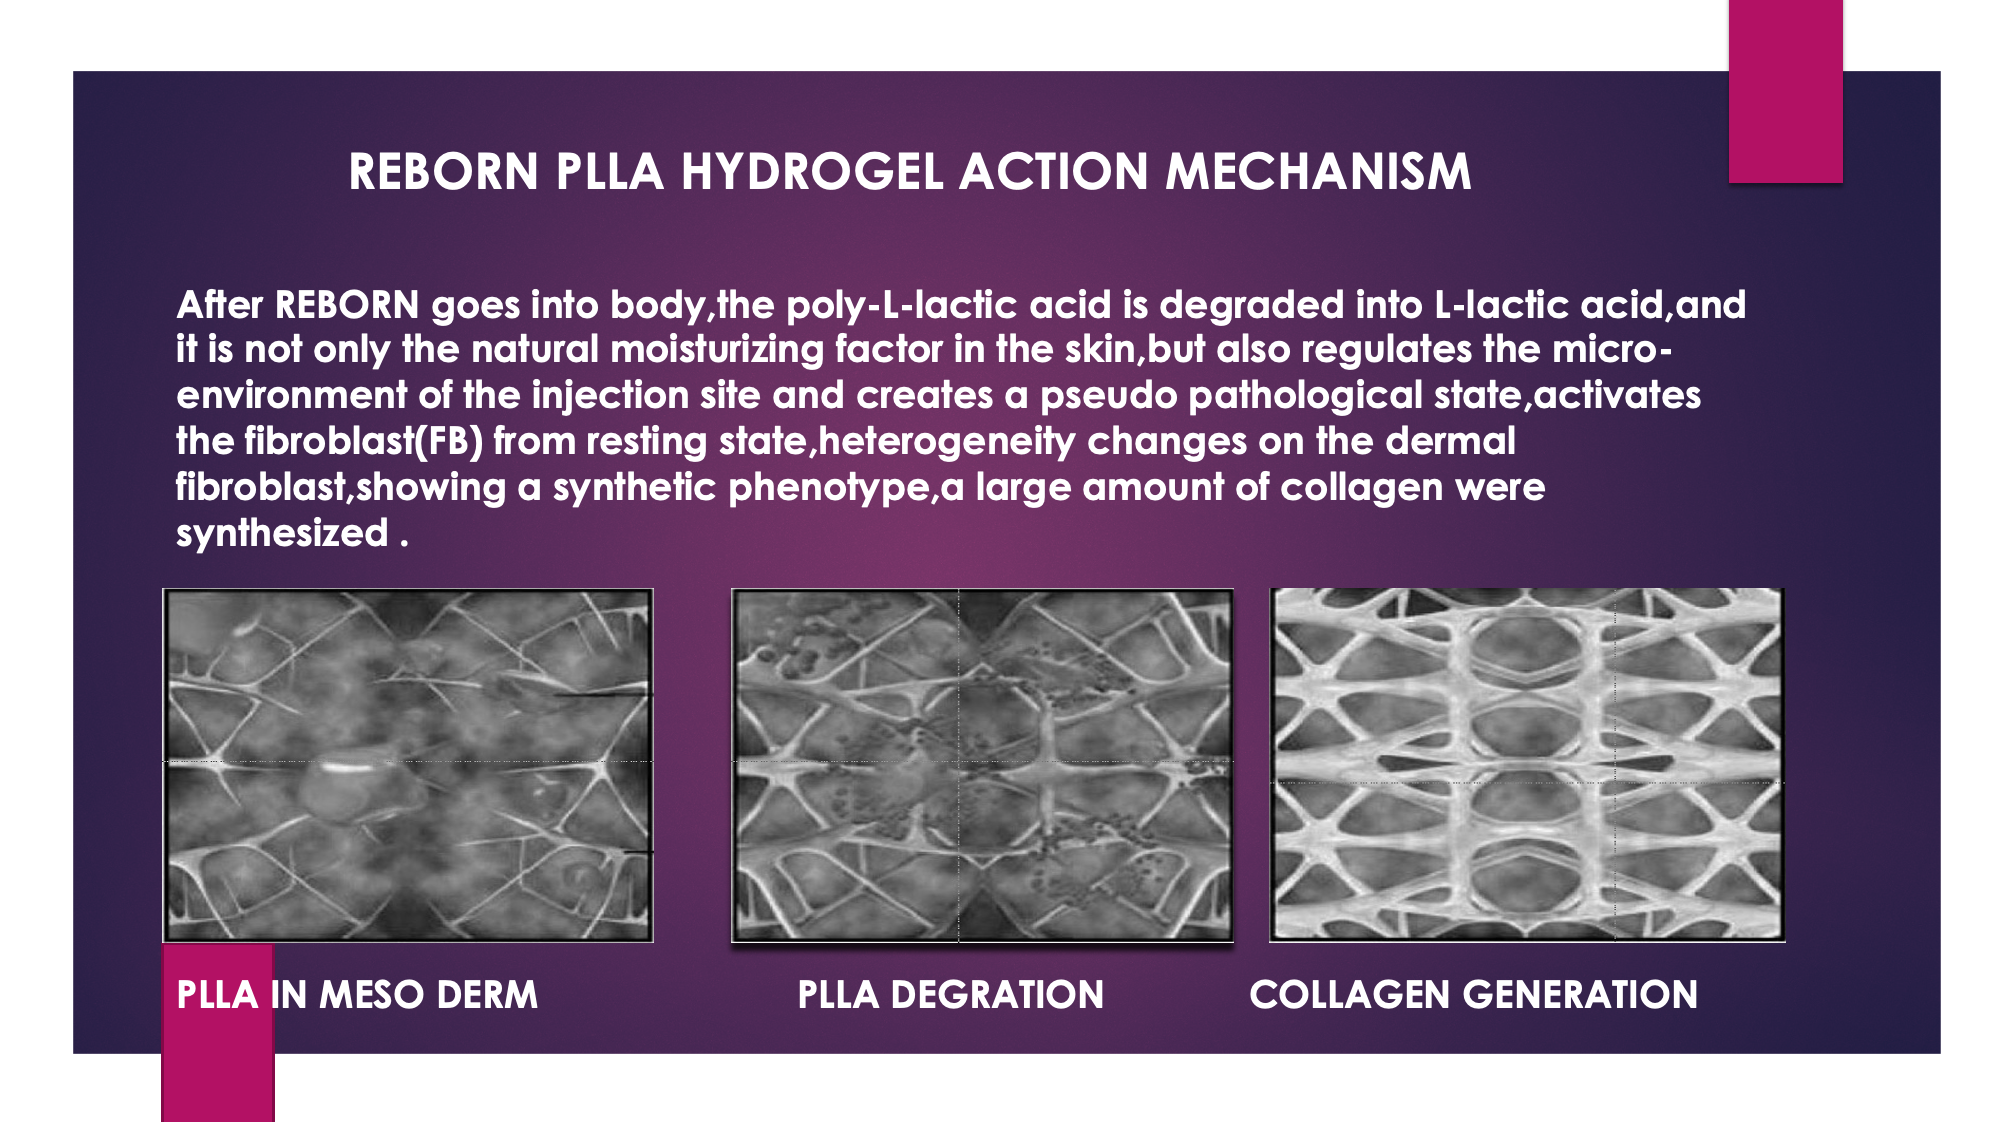 2ml 5ml Reborn plla hydrogel for removing the melanin in the body